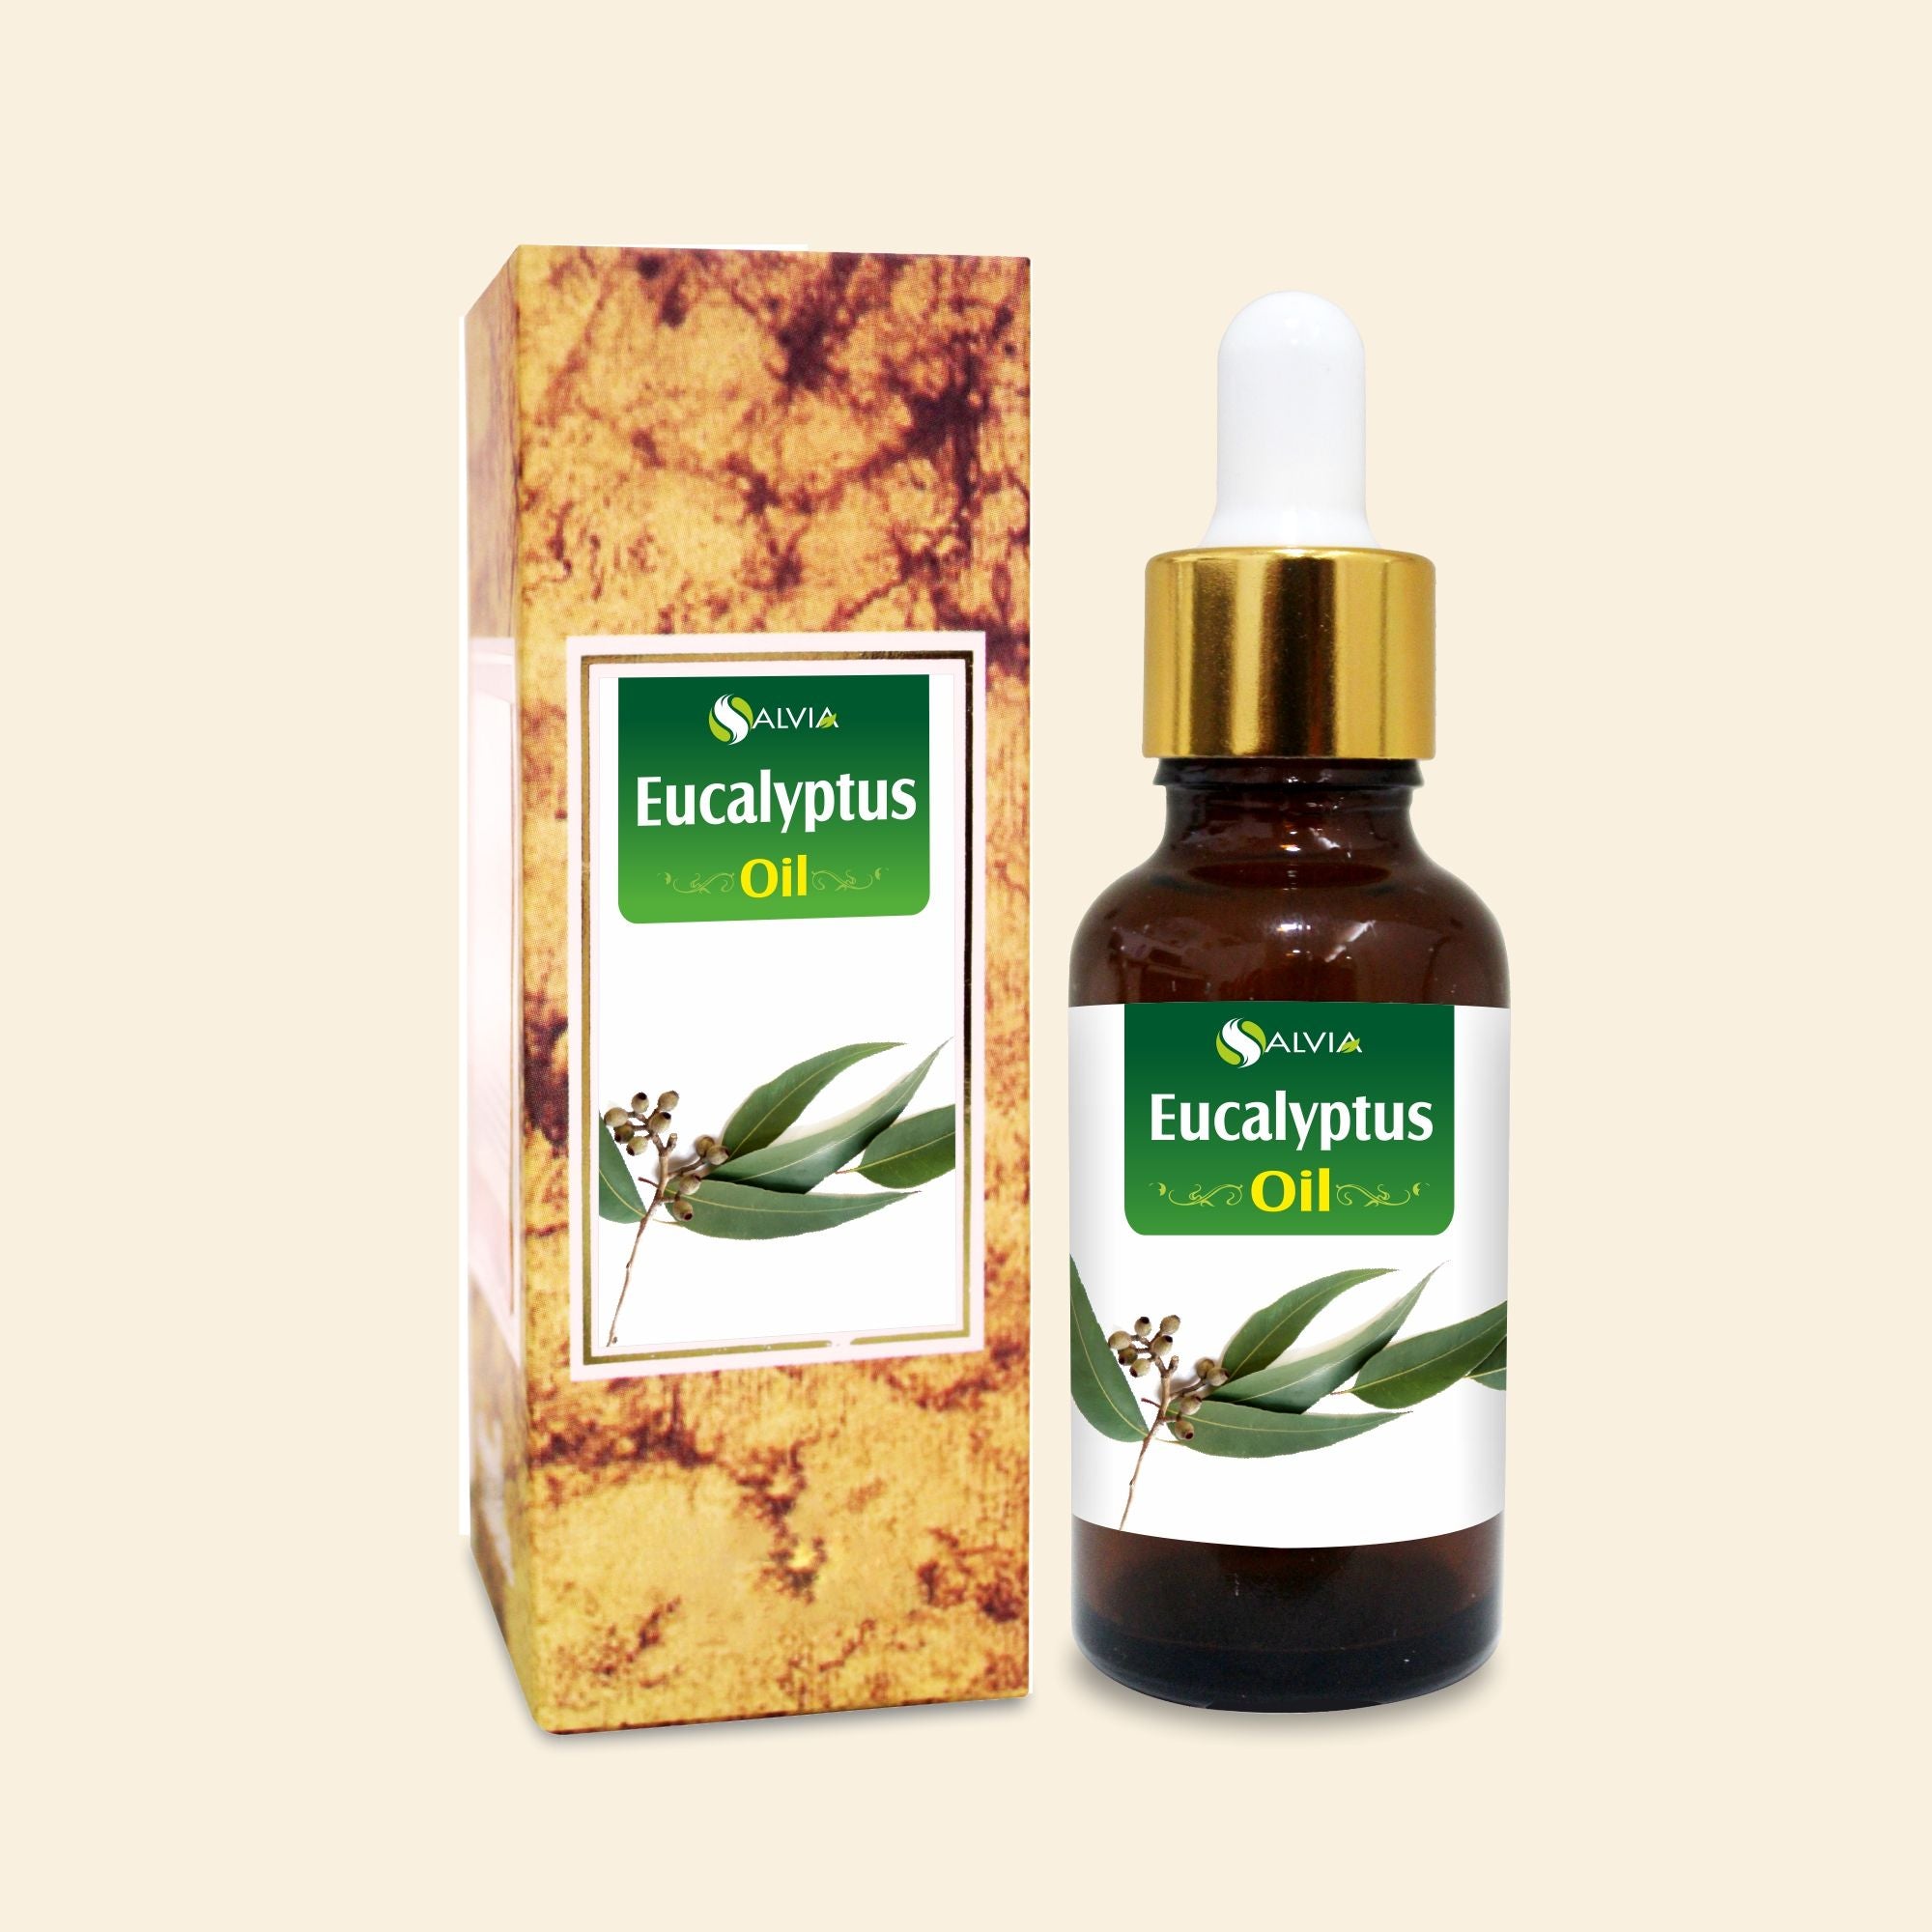 Salvia Natural Essential Oils,Greasy Oil,Anti Fungal,Anti-fungal Oil,Oil for Greasy Hair,Oil for Greasy Hair Eucalyptus Oil (Nilgiri Oil) Pure Essential Oil